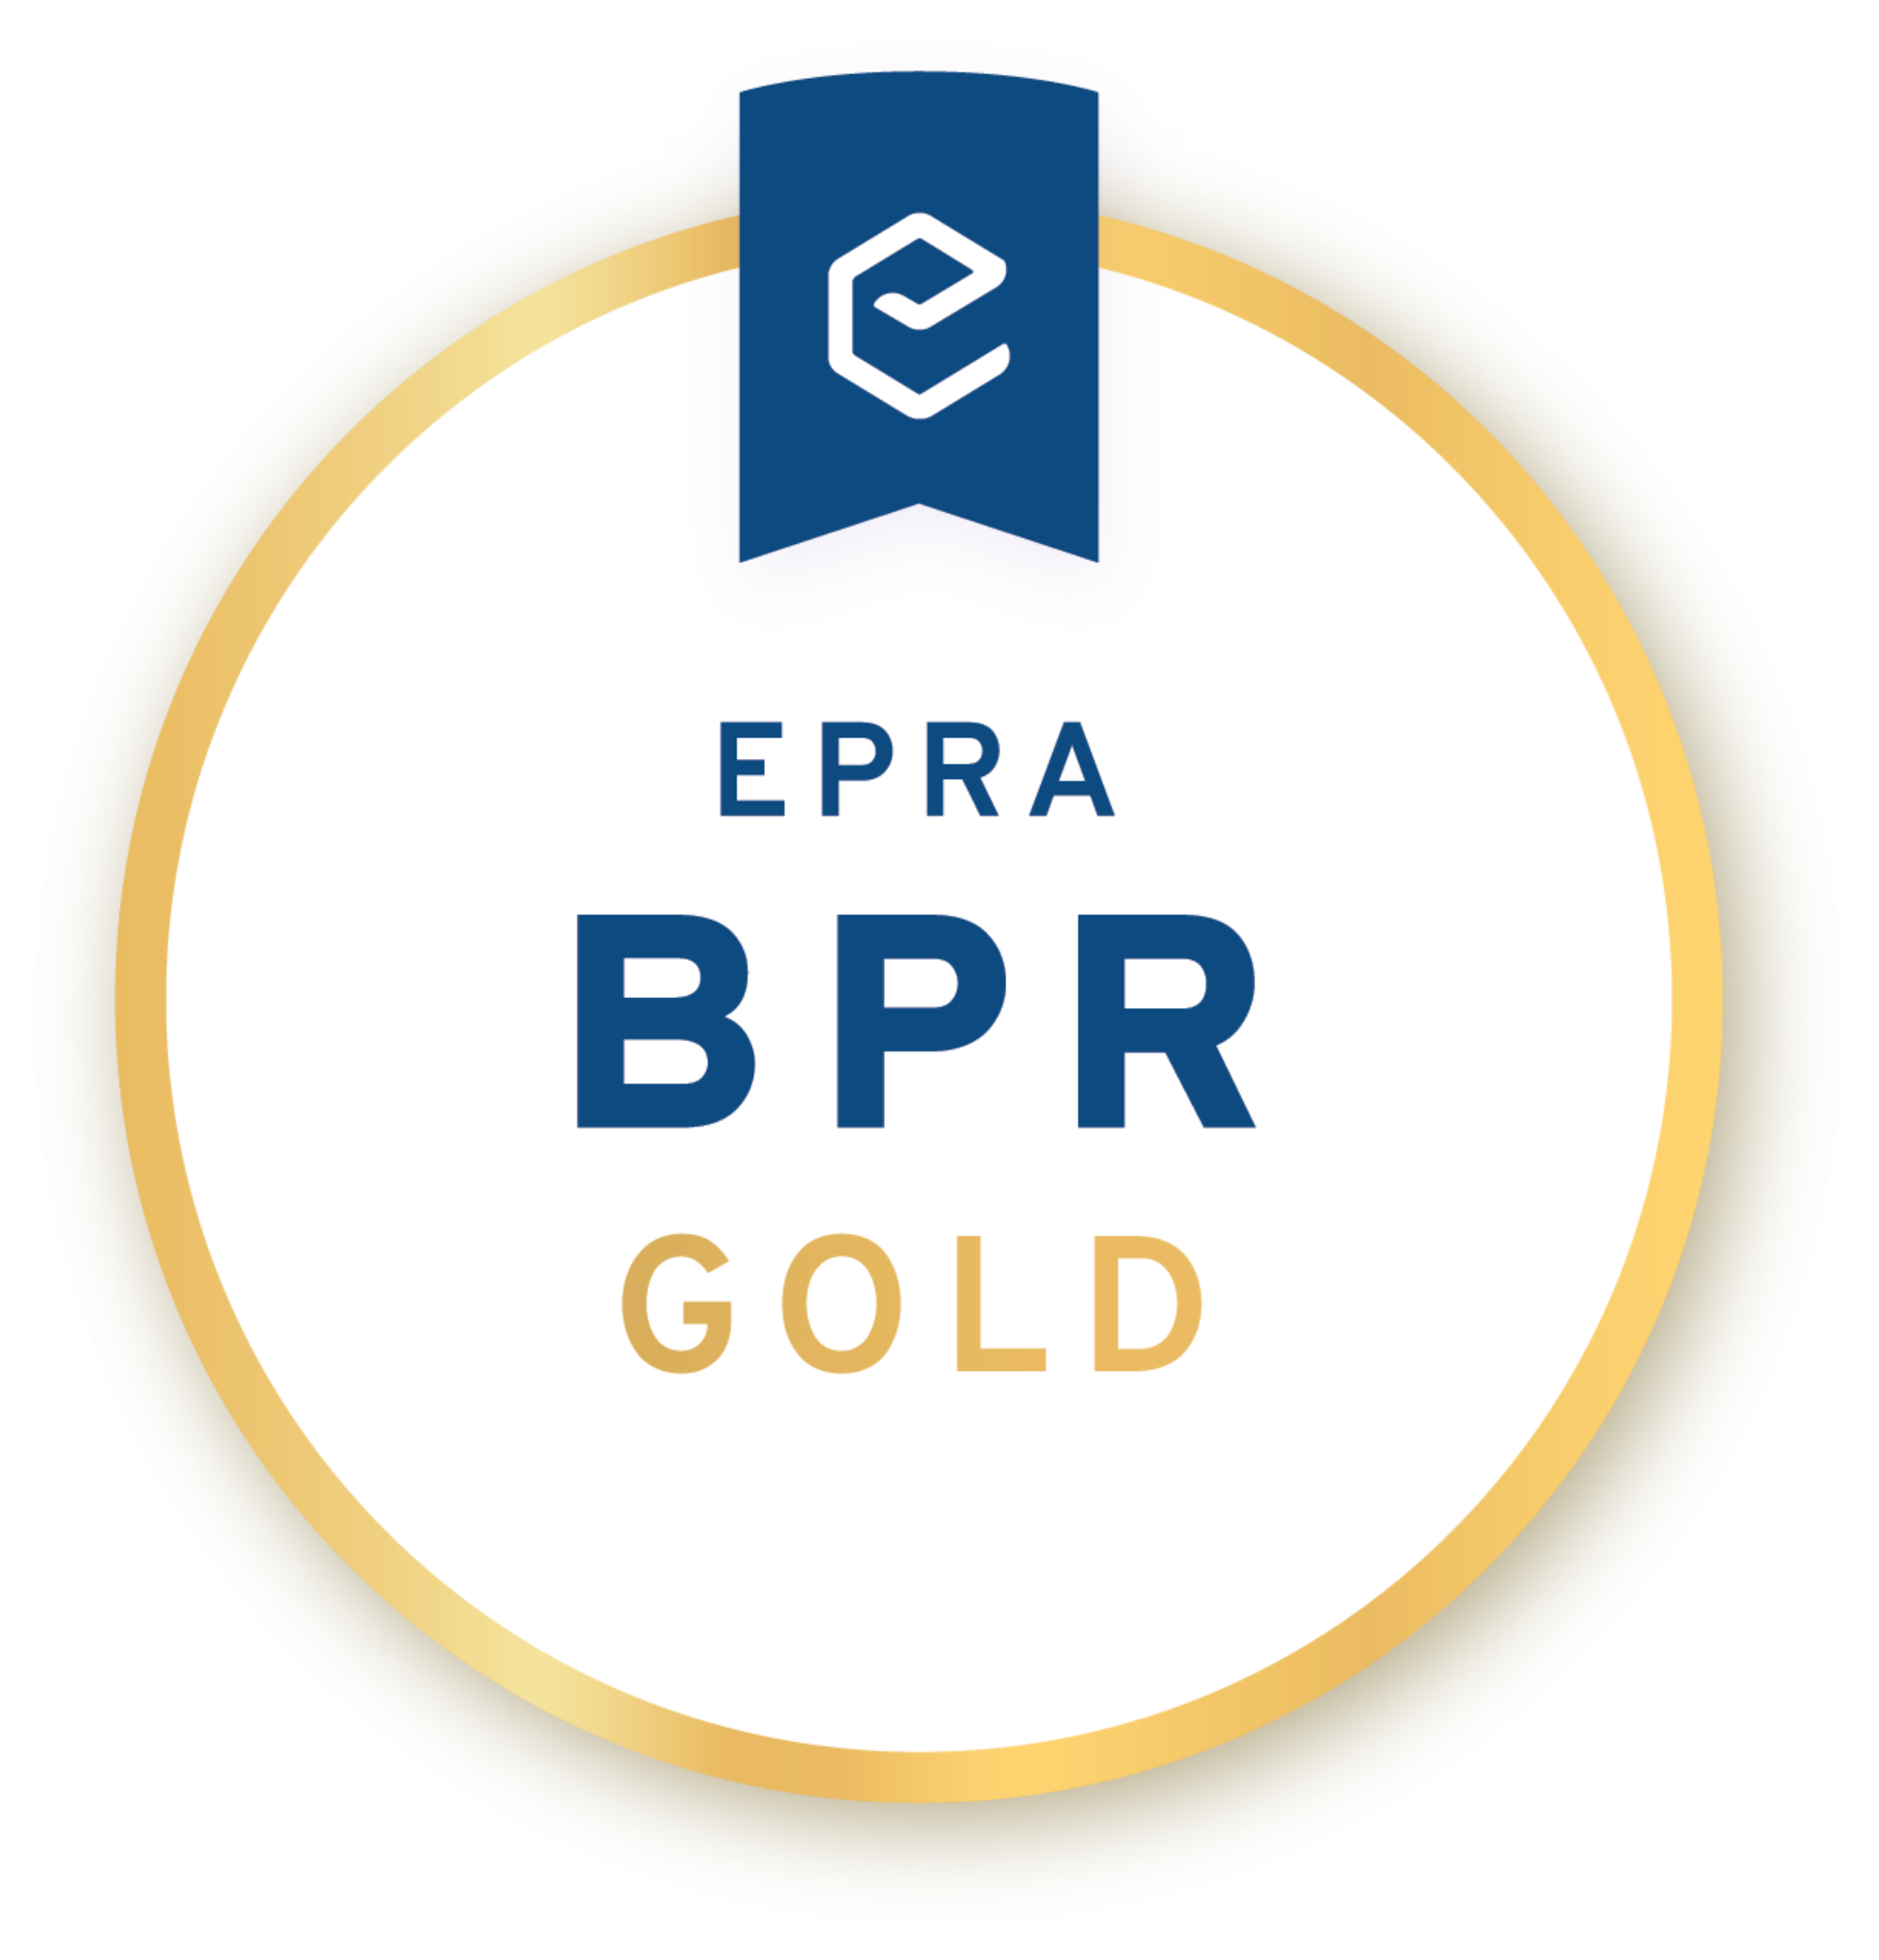 Derwent London wins EPRA Gold award 2018